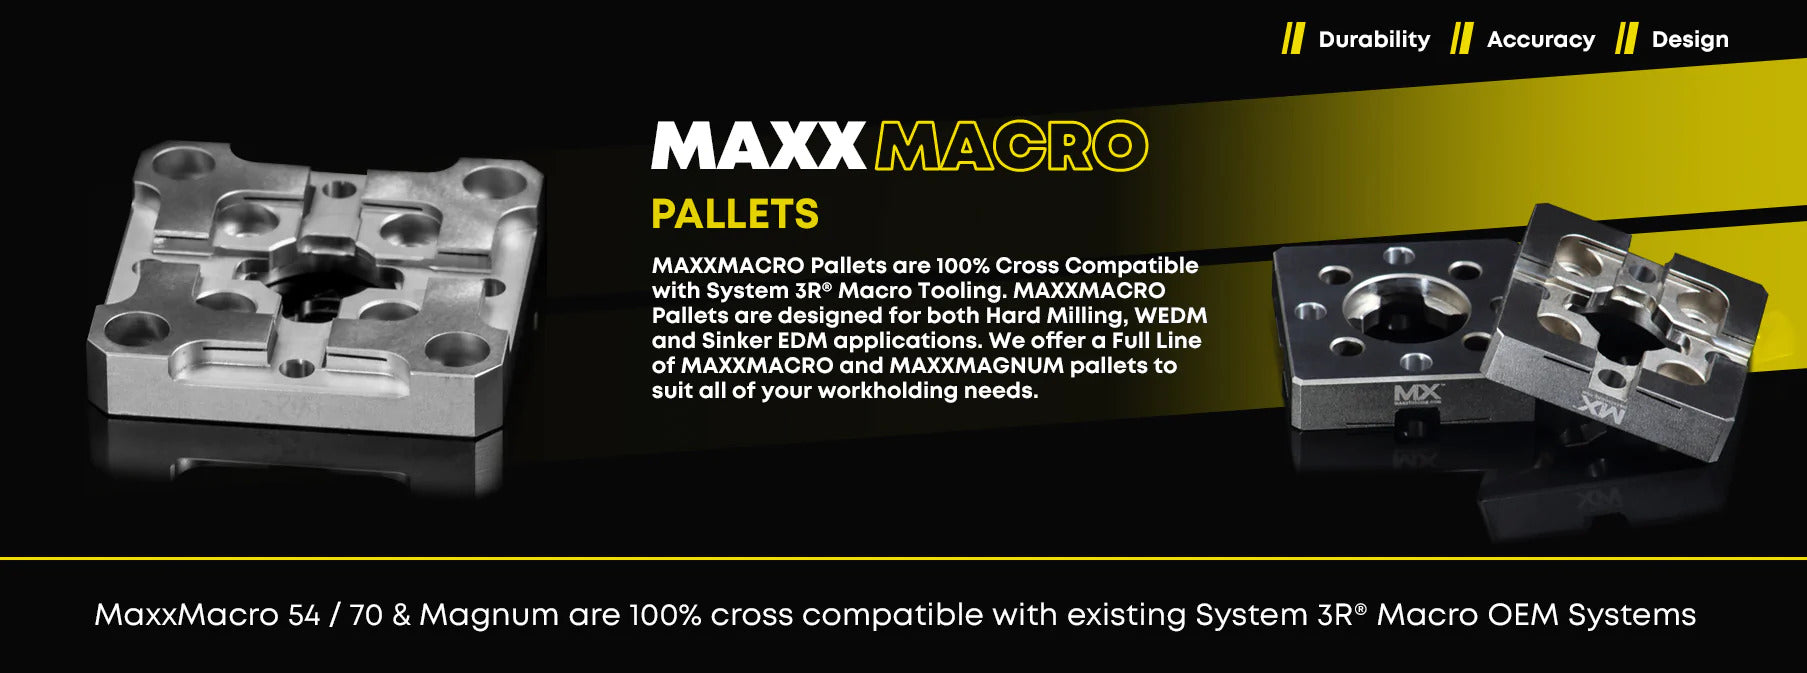 MaxxMacro Pallets